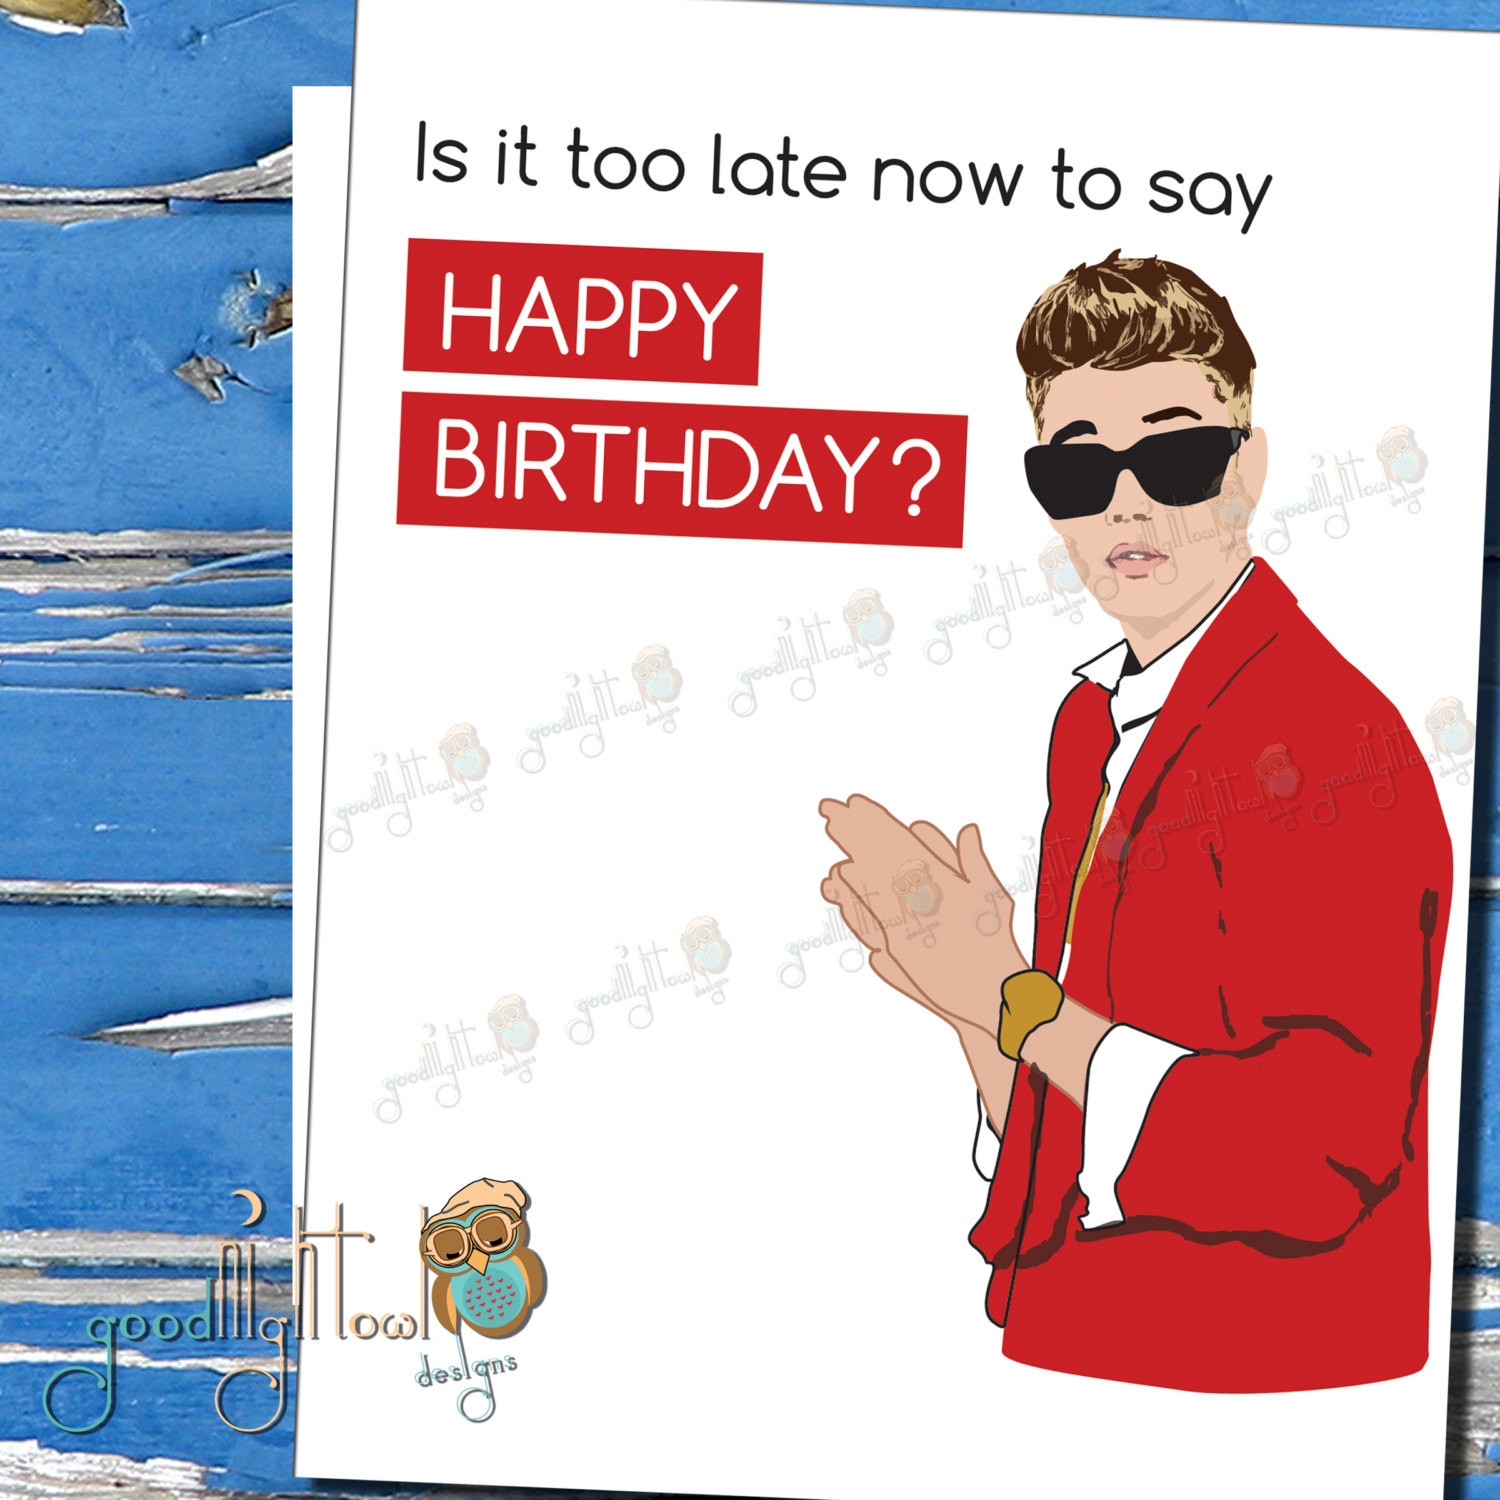 Justin Bieber Birthday Card
 Funny Belated Birthday Card Justin Bieber Is it too late now